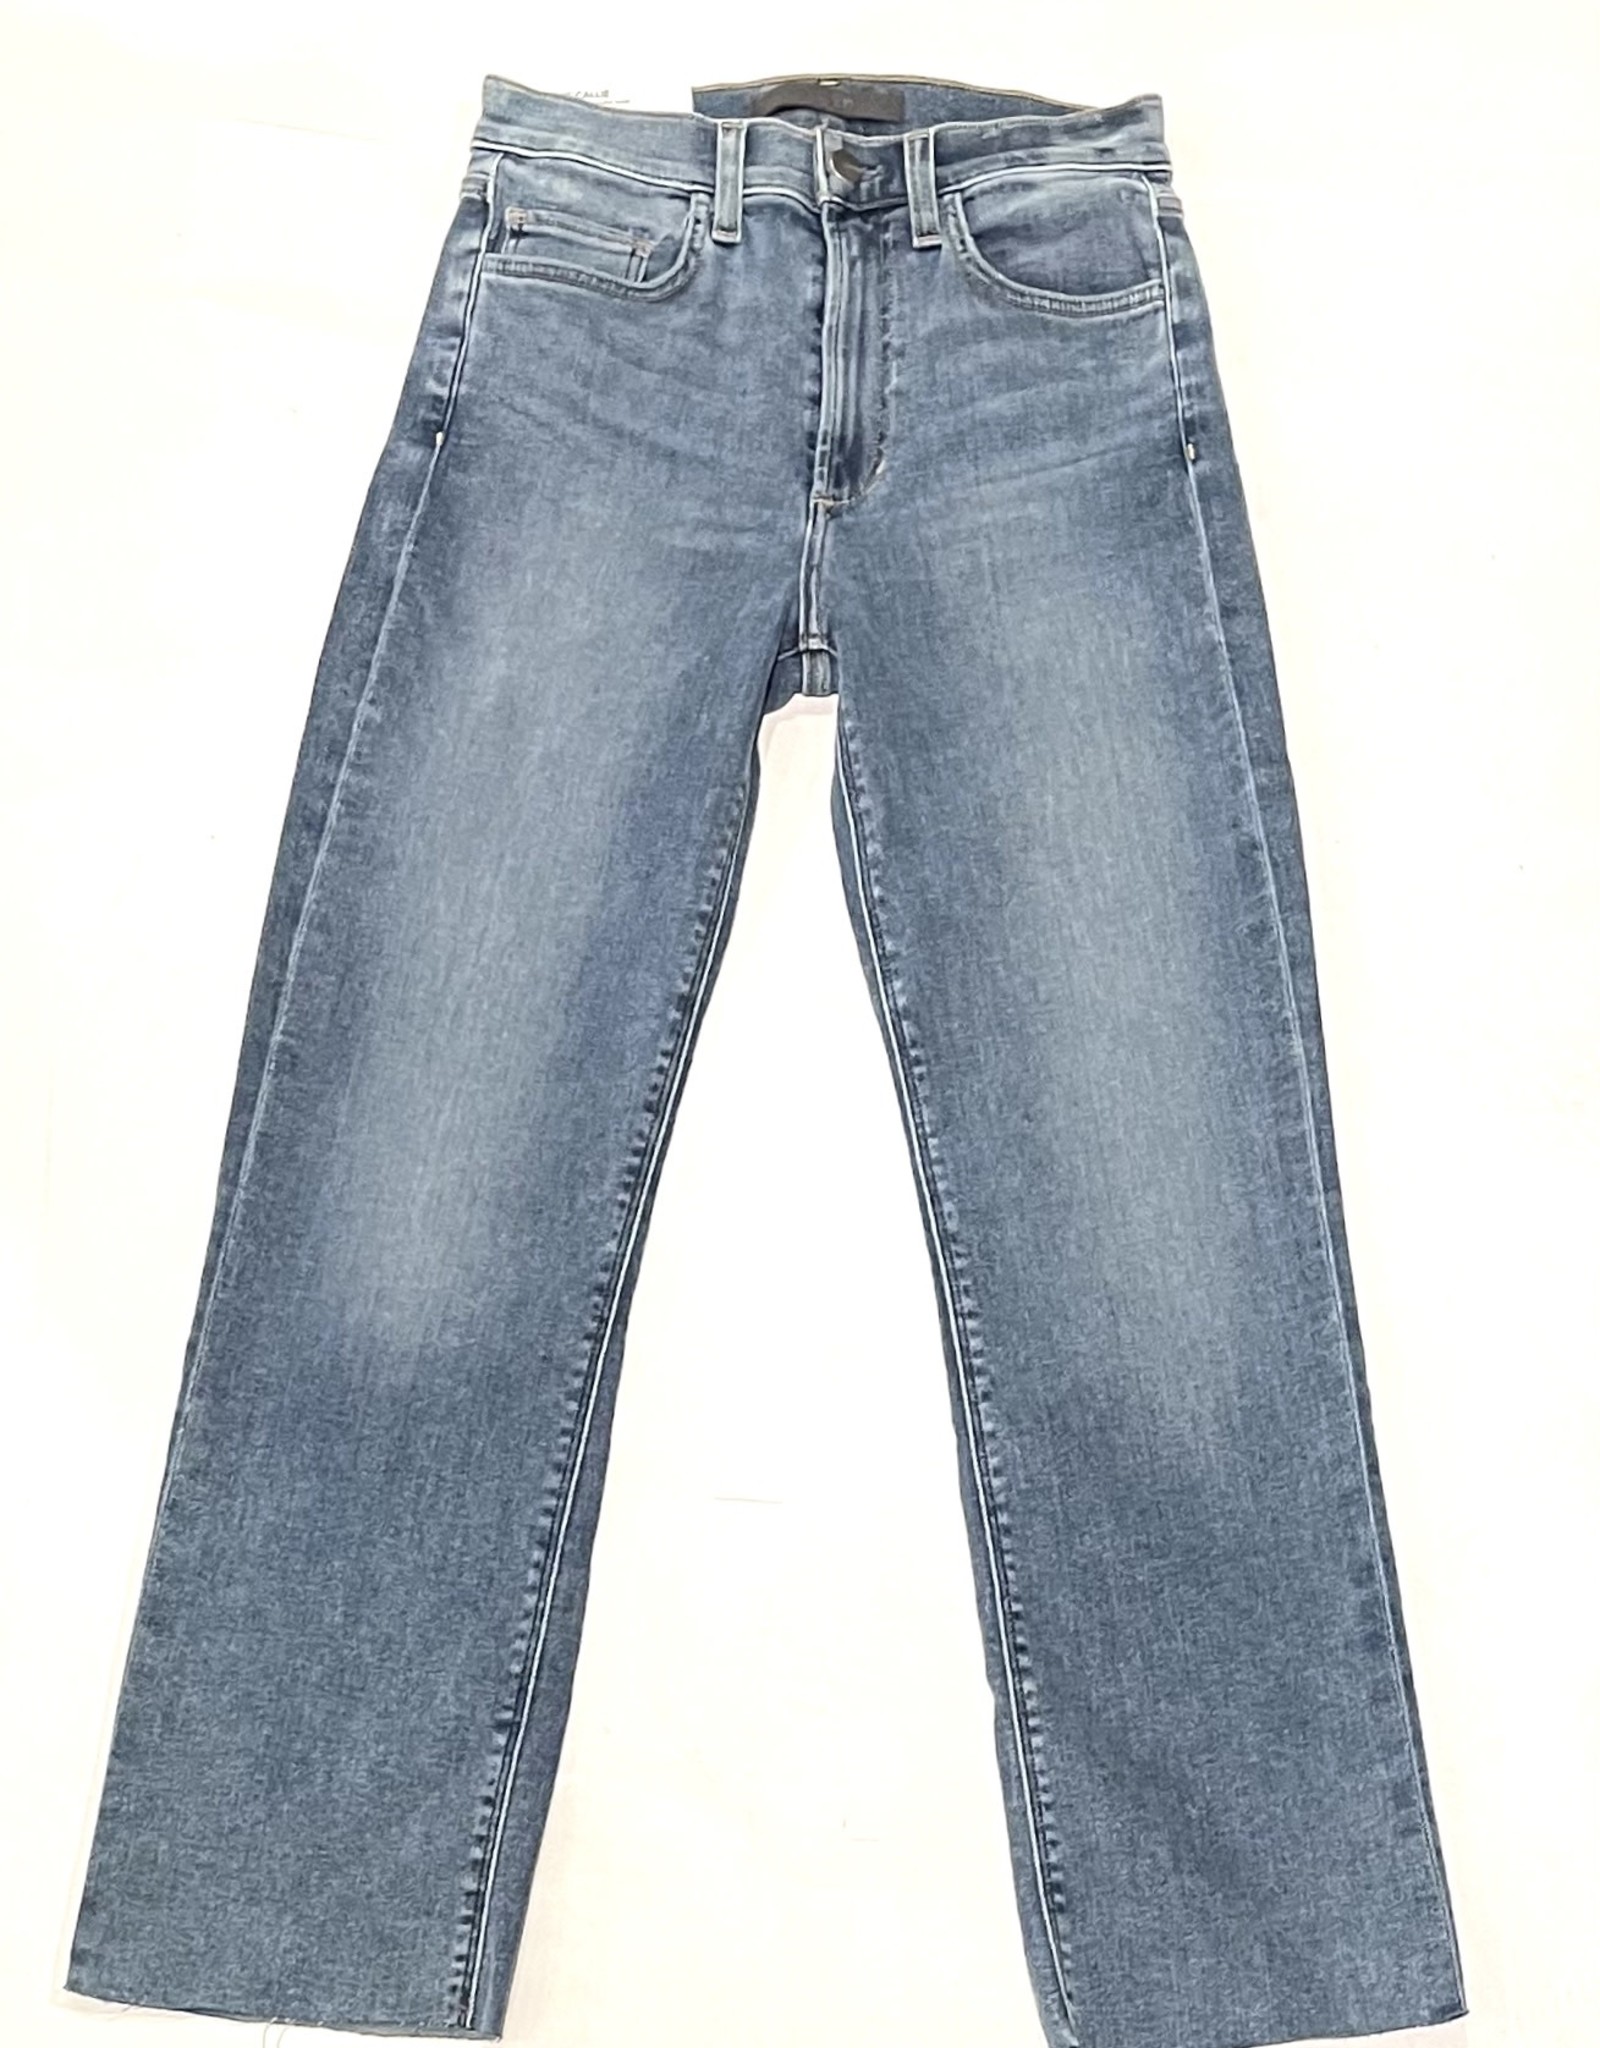 Joe's Jeans Callie hi rise crop boot CKSAVA5217